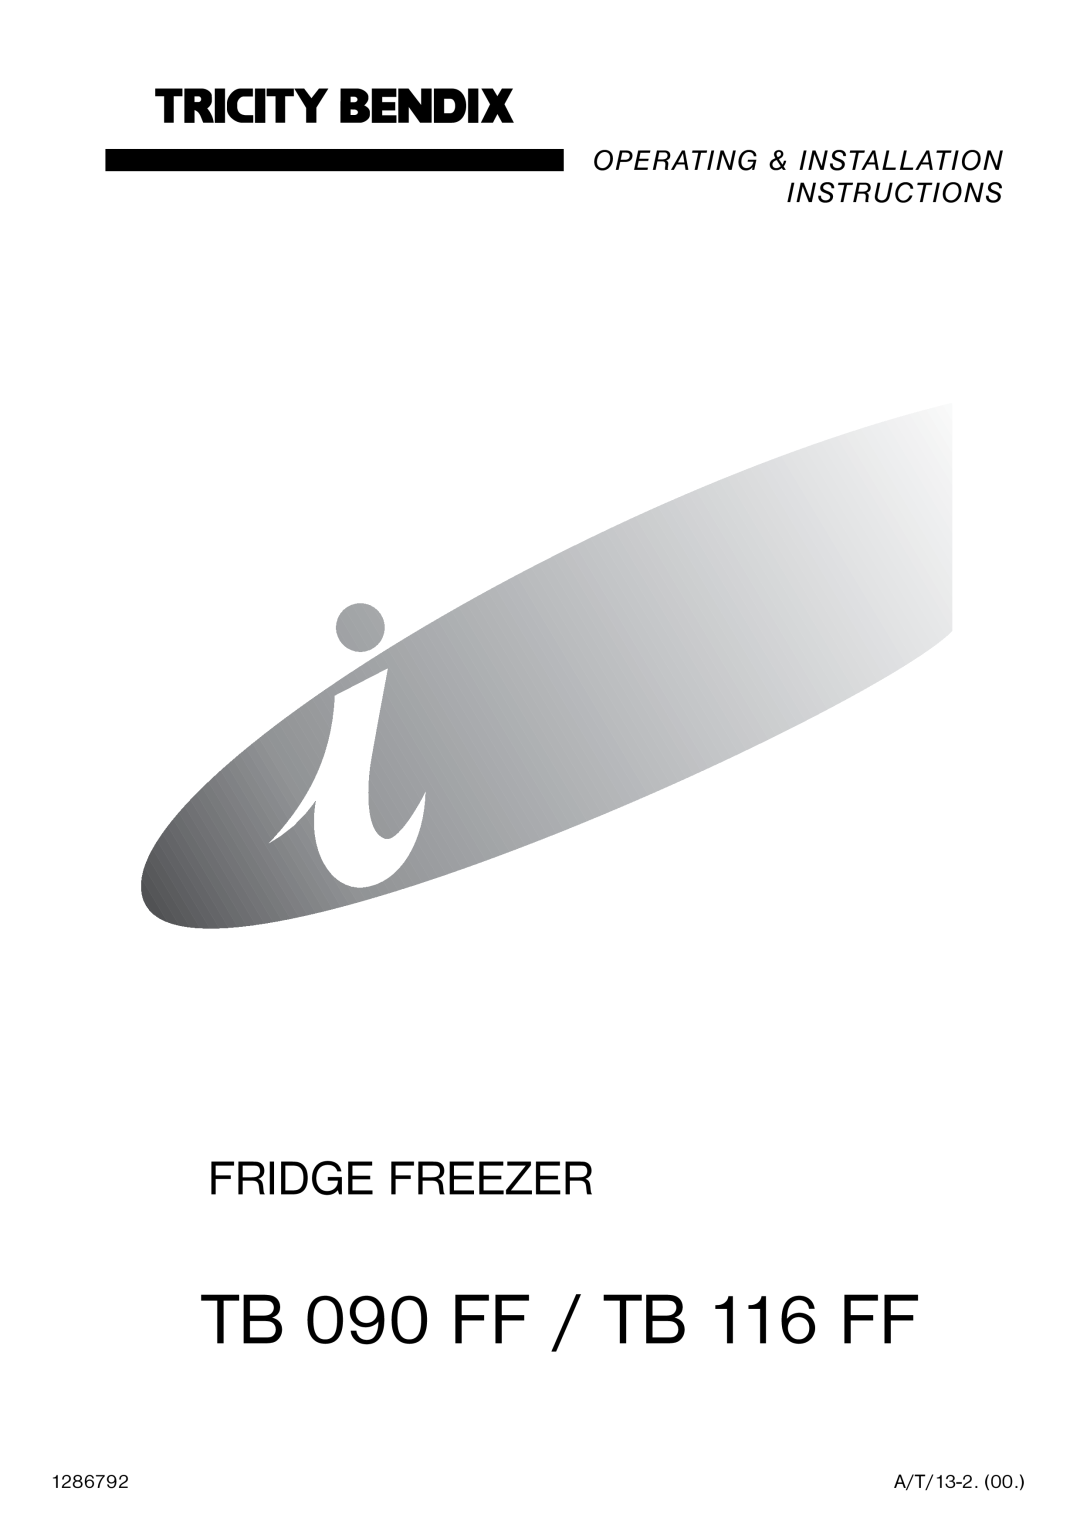 Tricity Bendix installation instructions TB 090 FF / TB 116 FF, Fridge Freezer, Operating & Installation Instructions 